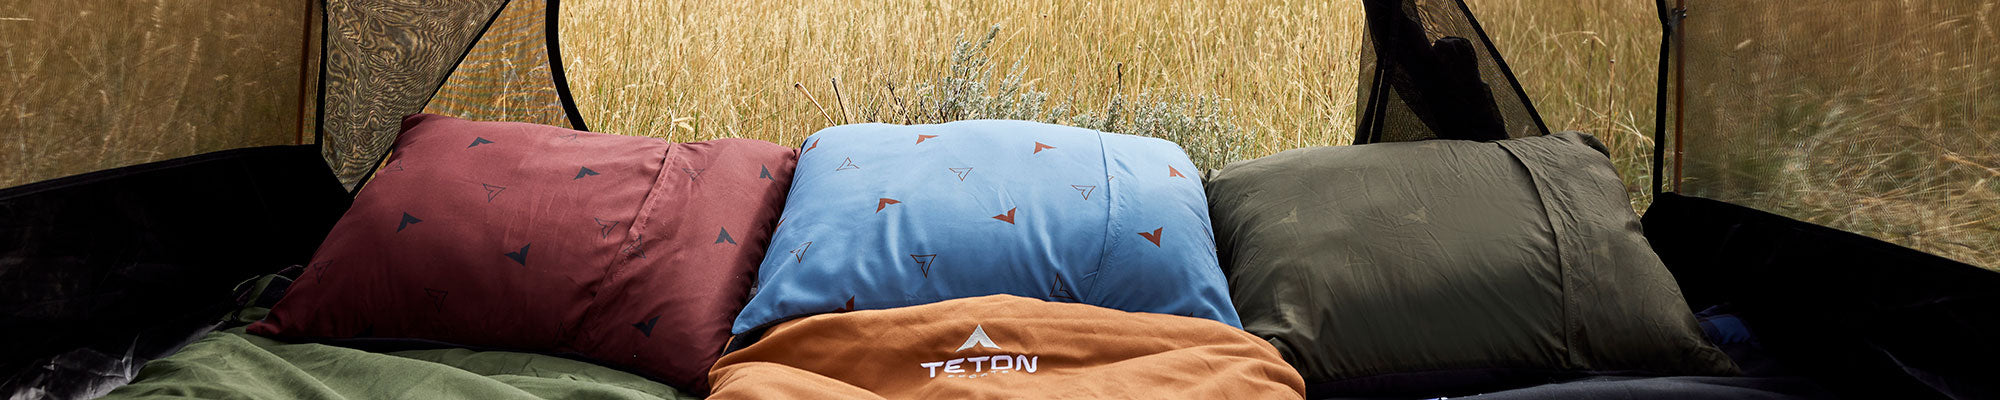 TETON Sports Grand camp pillows